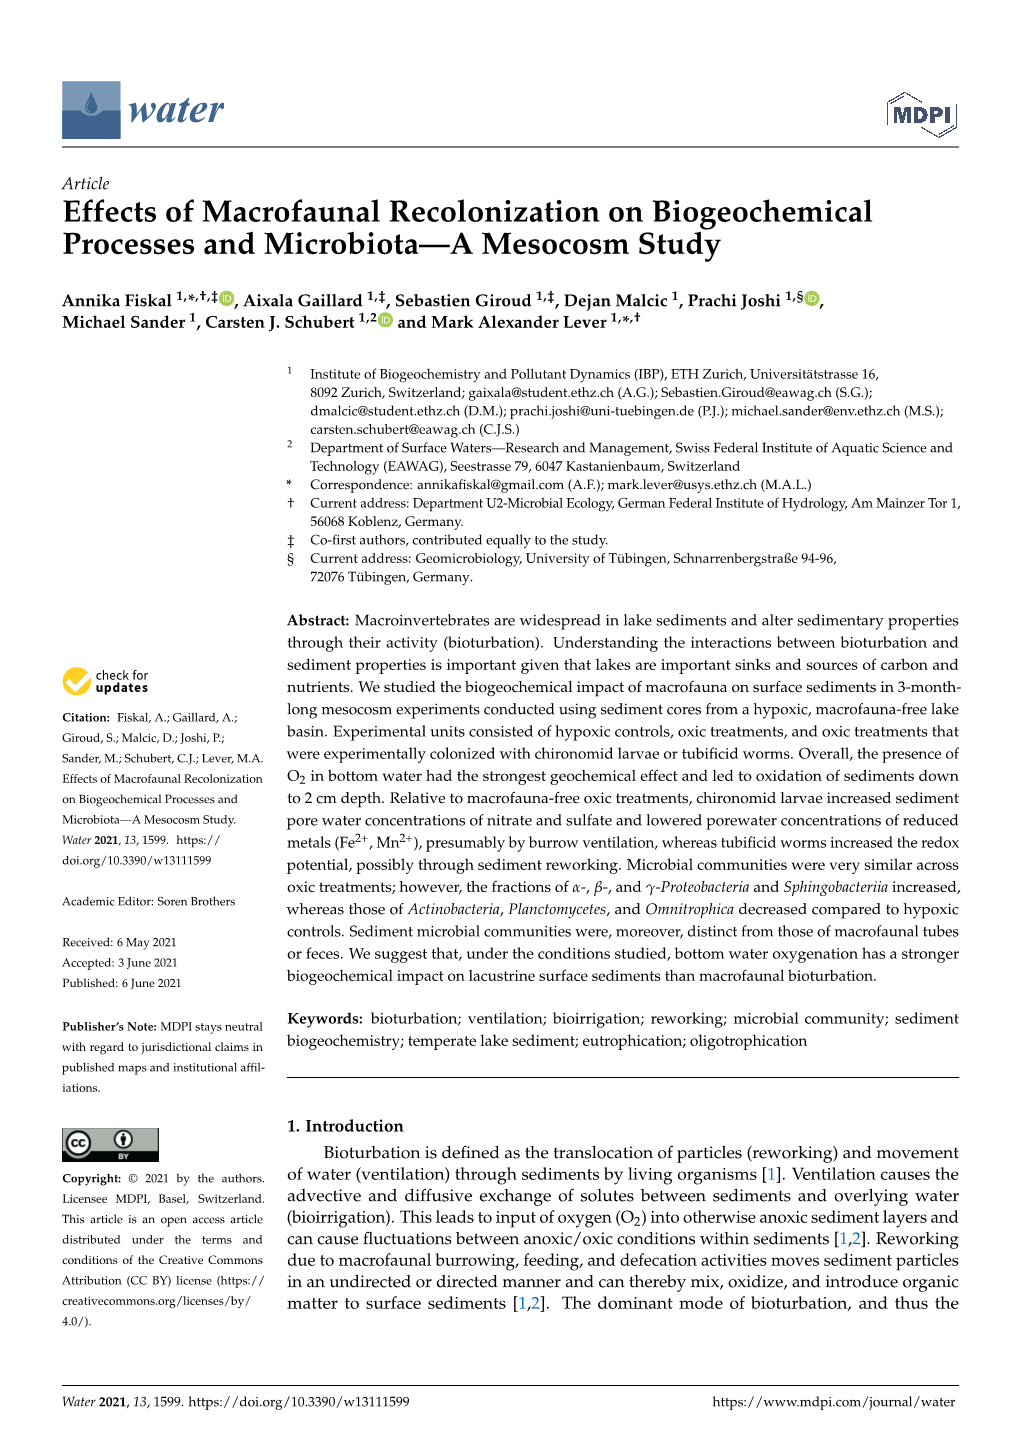 Effects of Macrofaunal Recolonization on Biogeochemical Processes and Microbiota—A Mesocosm Study